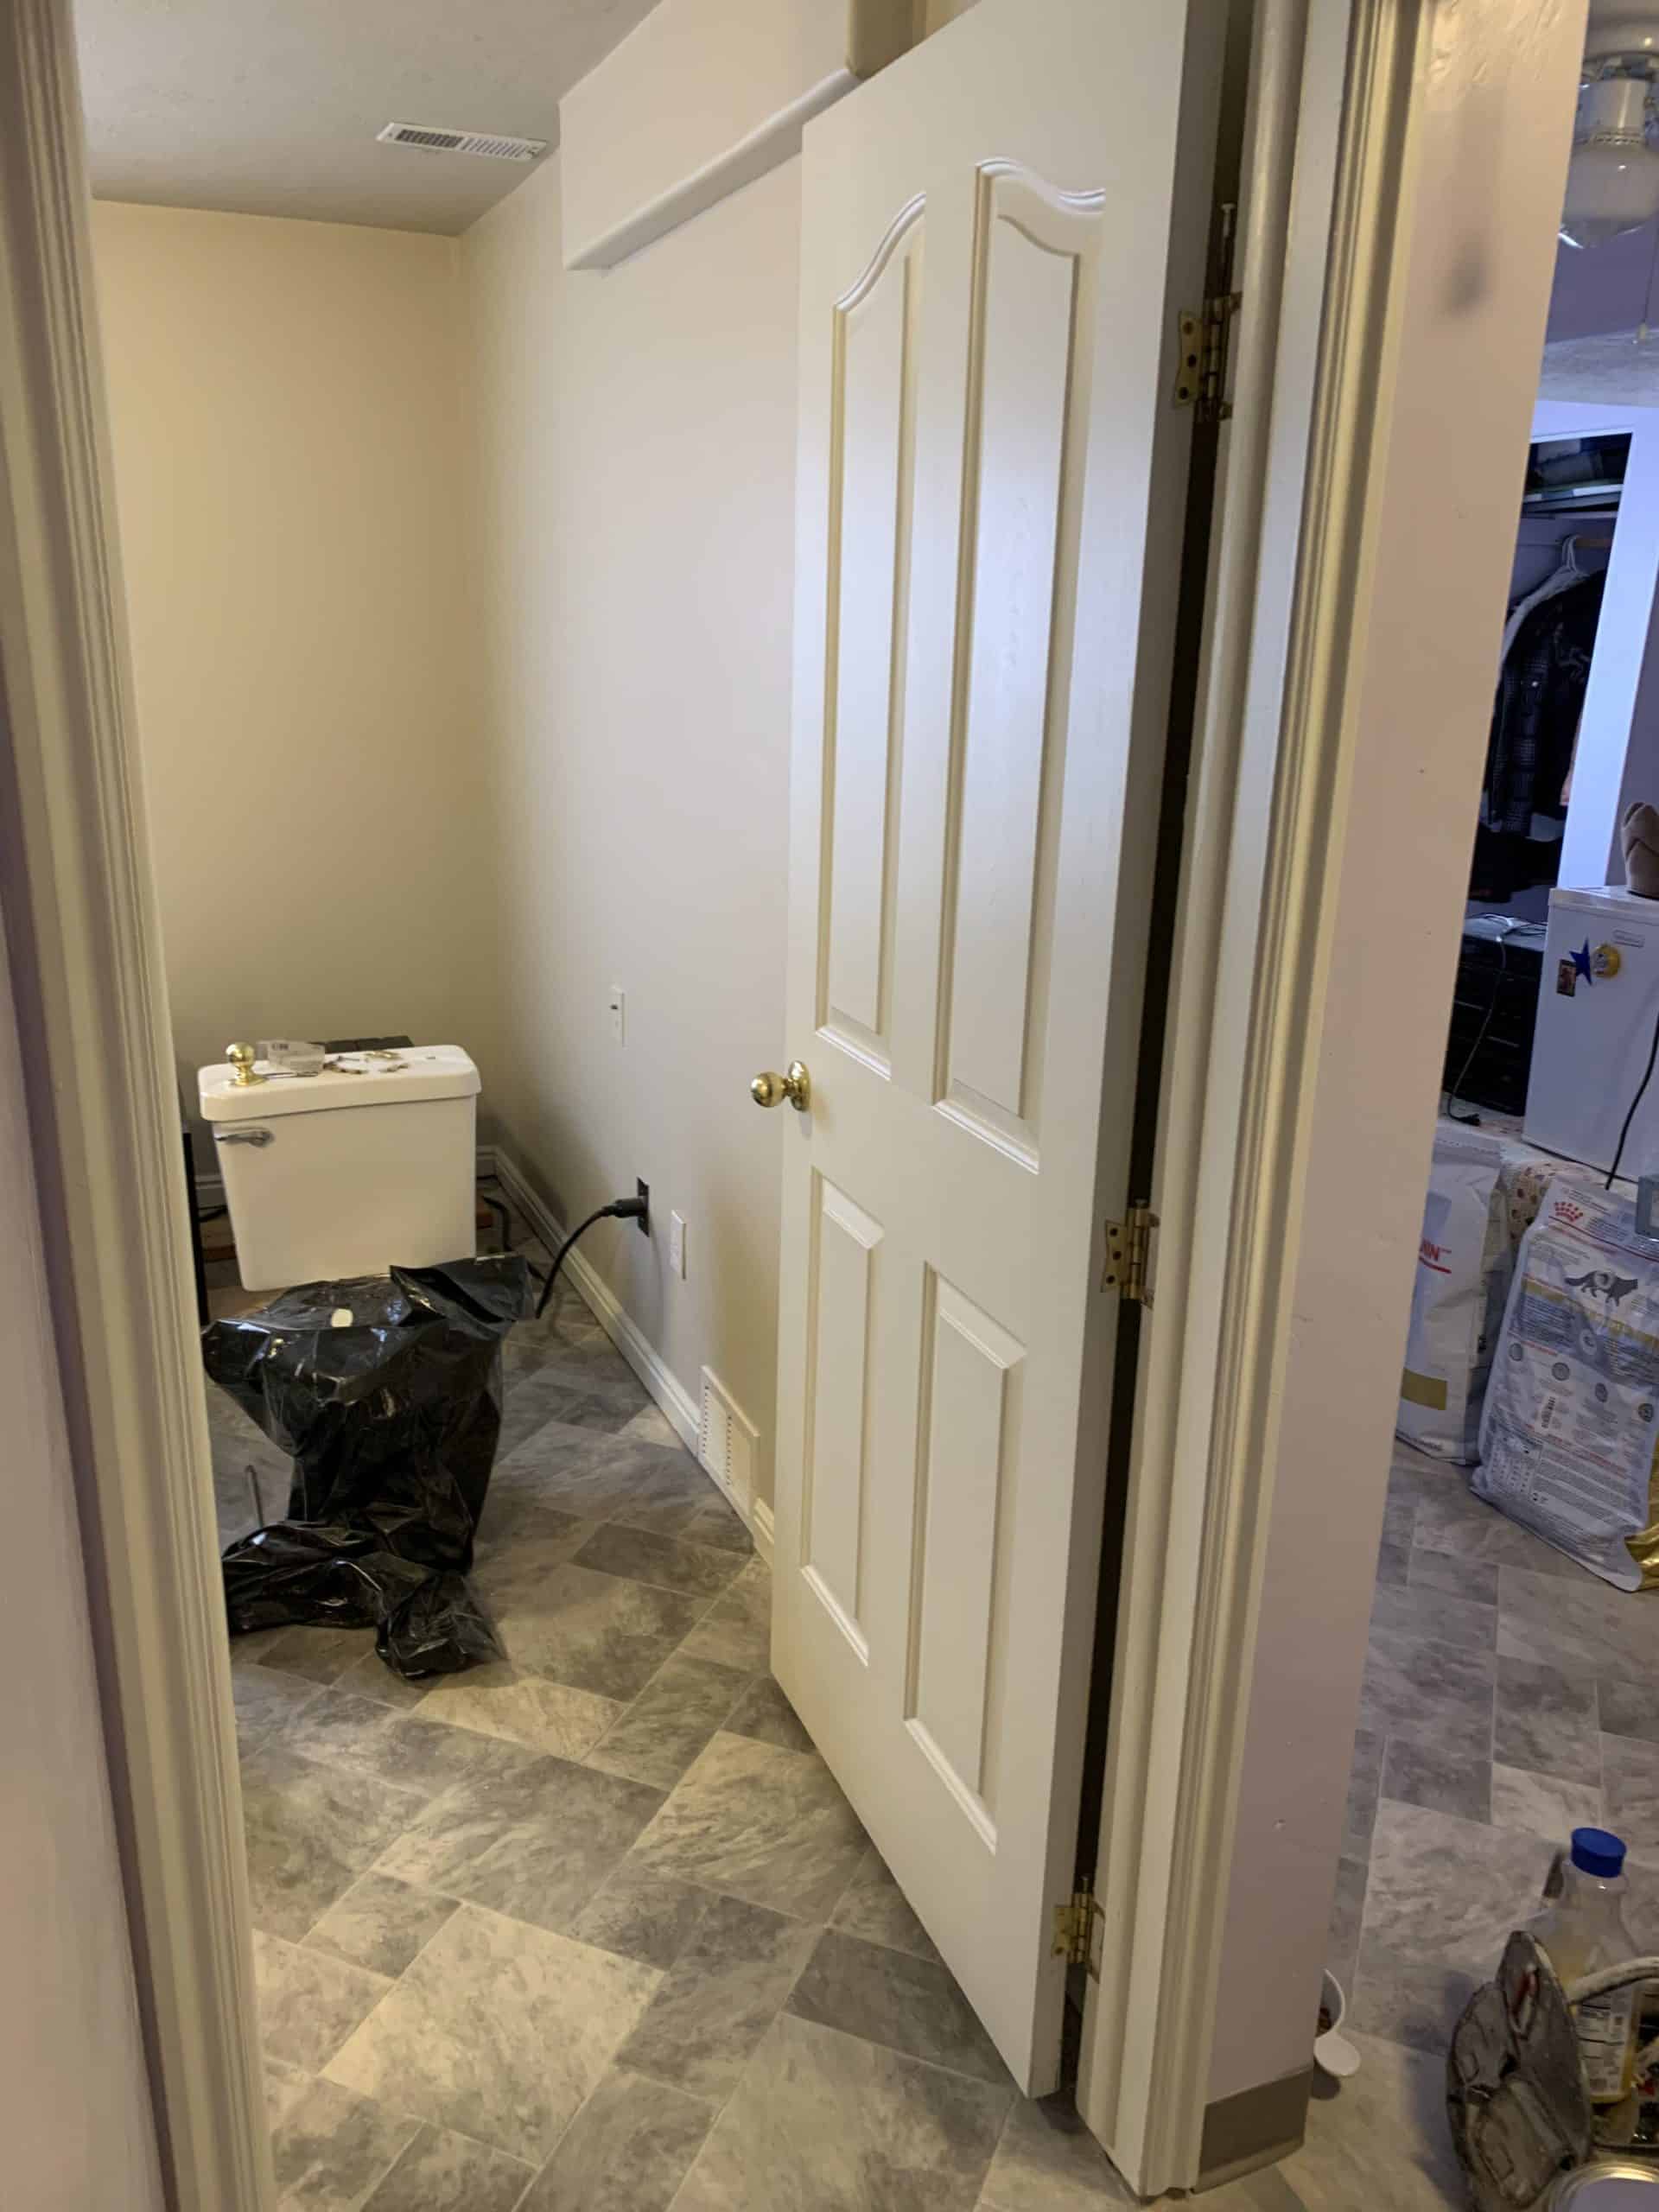 Bathroom and Bedroom Restoration in North Salt Lake, UT